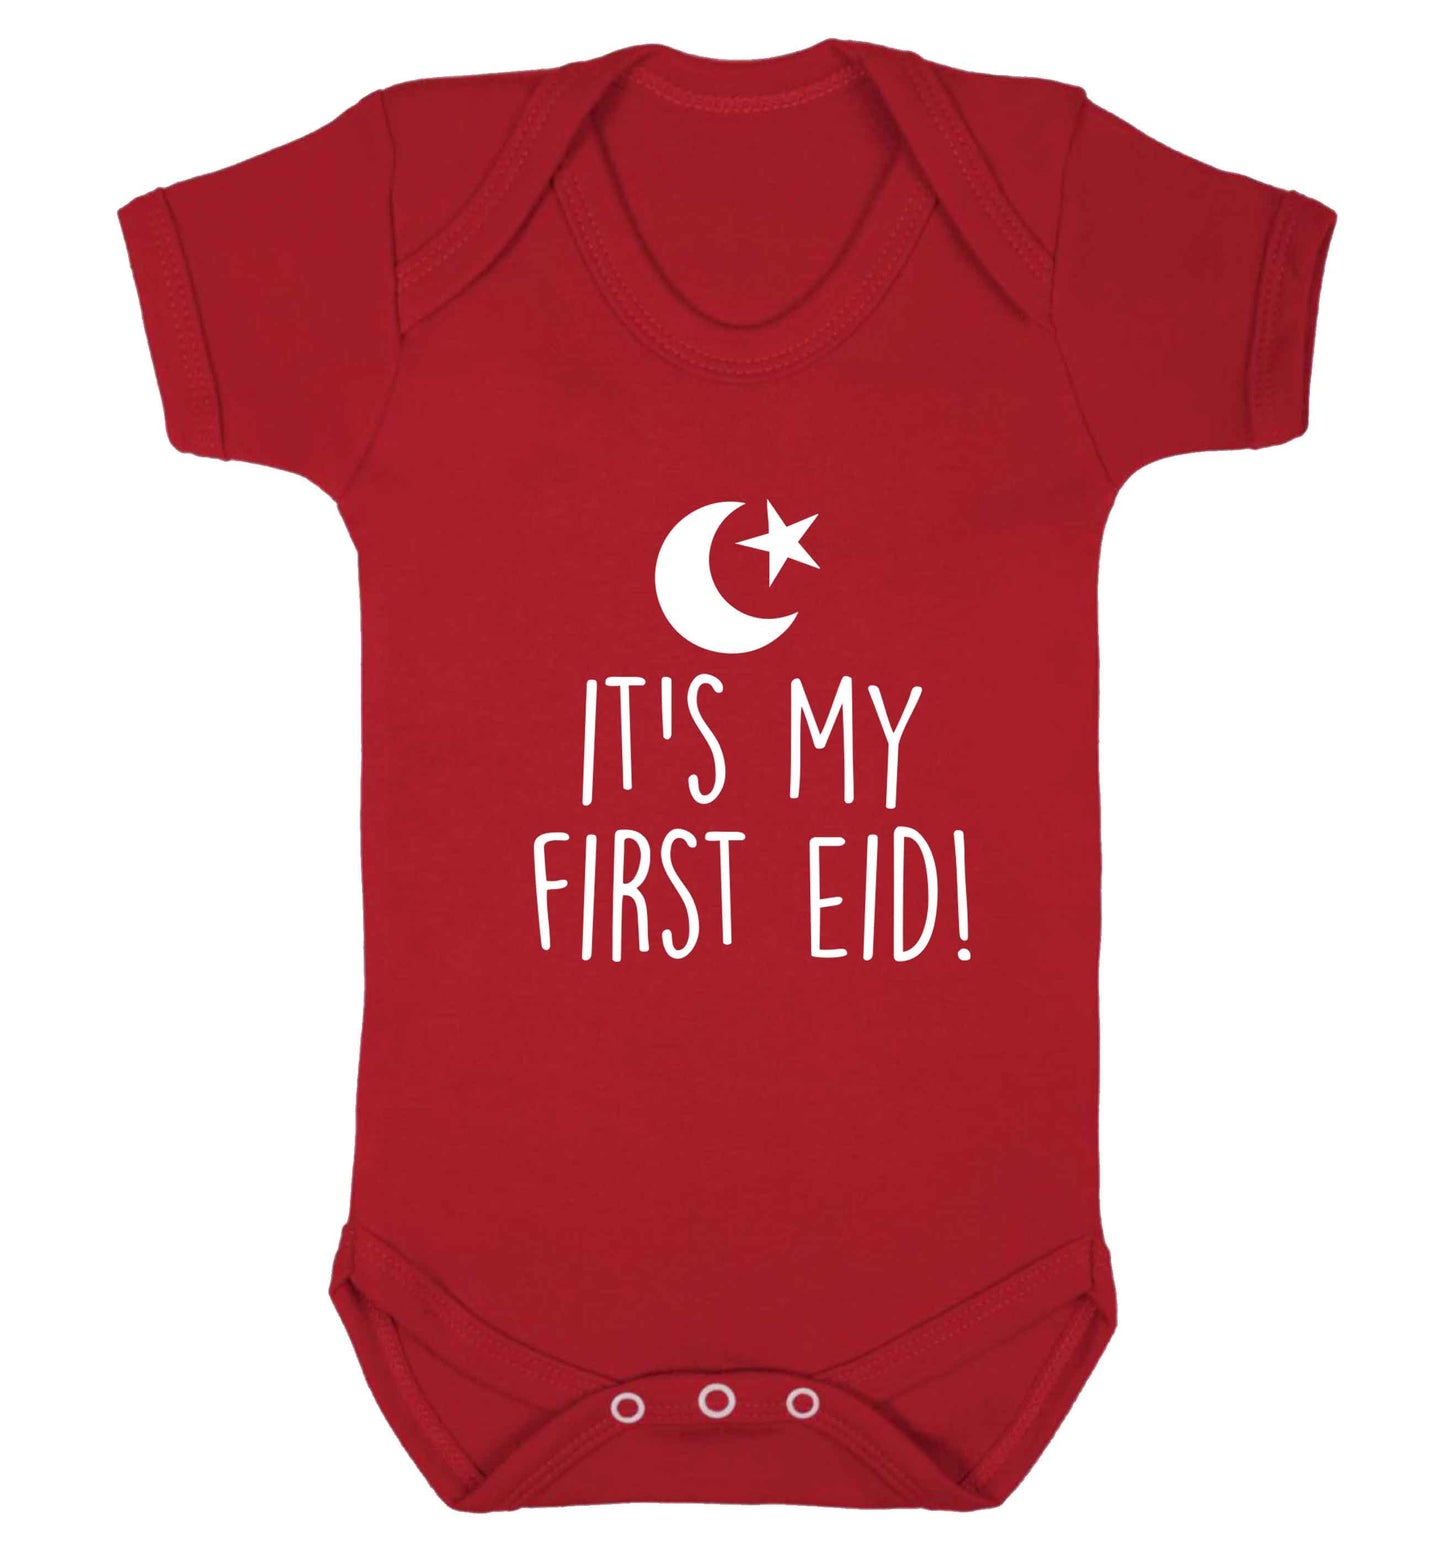 It's my first Eid baby vest red 18-24 months